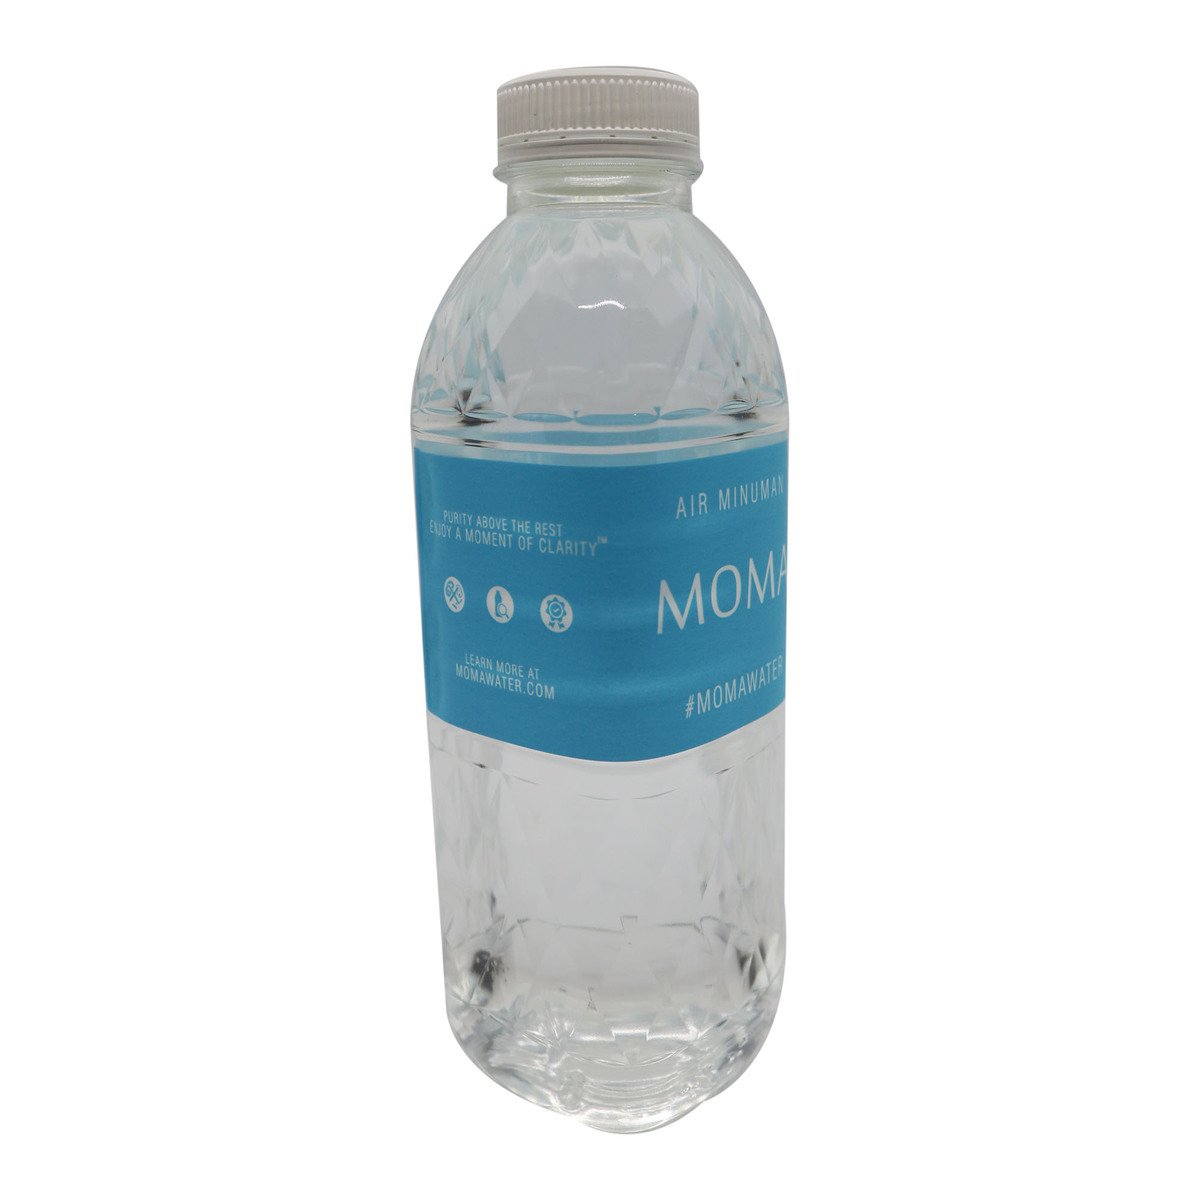 Moma Water 300ml